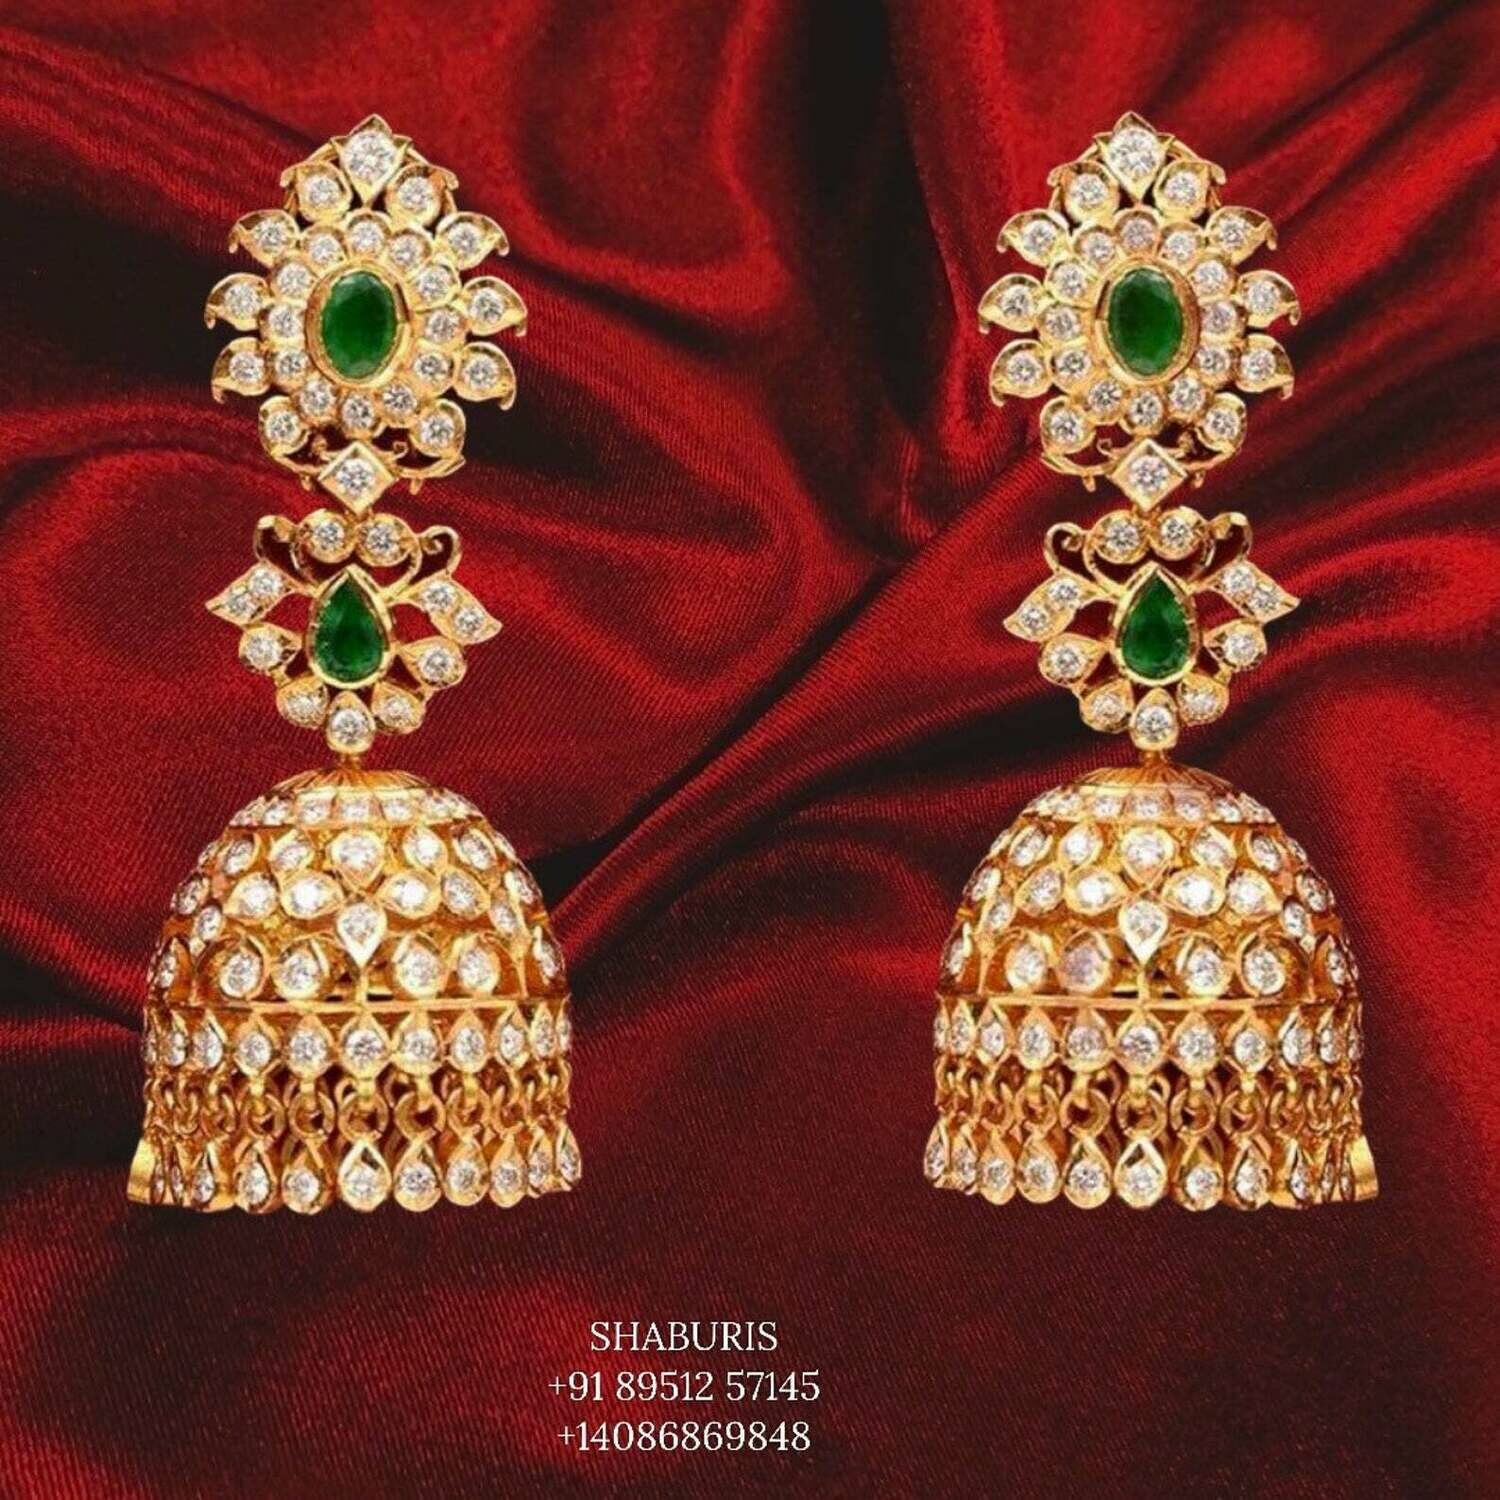 Latest Indian Jewelry,South Indian Jewelry,jhumka,clustered pearl,diamond jhumka,pure Silver indian jewelry - NIHIRA - SHABURIS